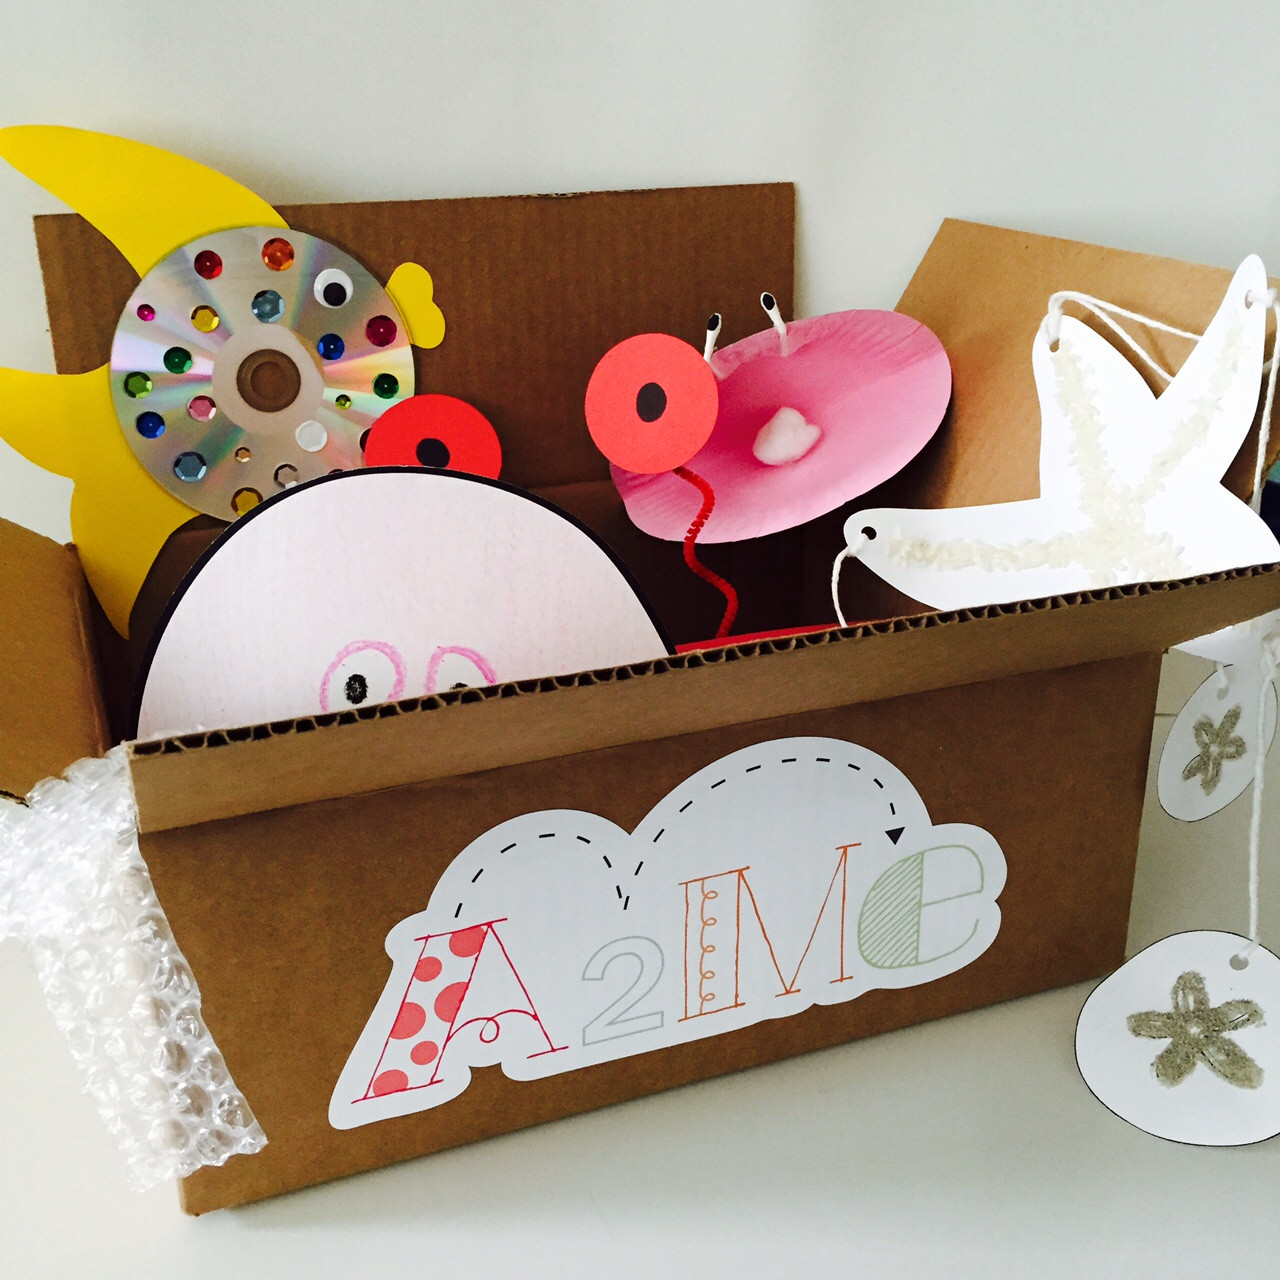 Preschool Craft Supplies
 A2Me Preschool Announces Curated Craft Kits for 2015 2016